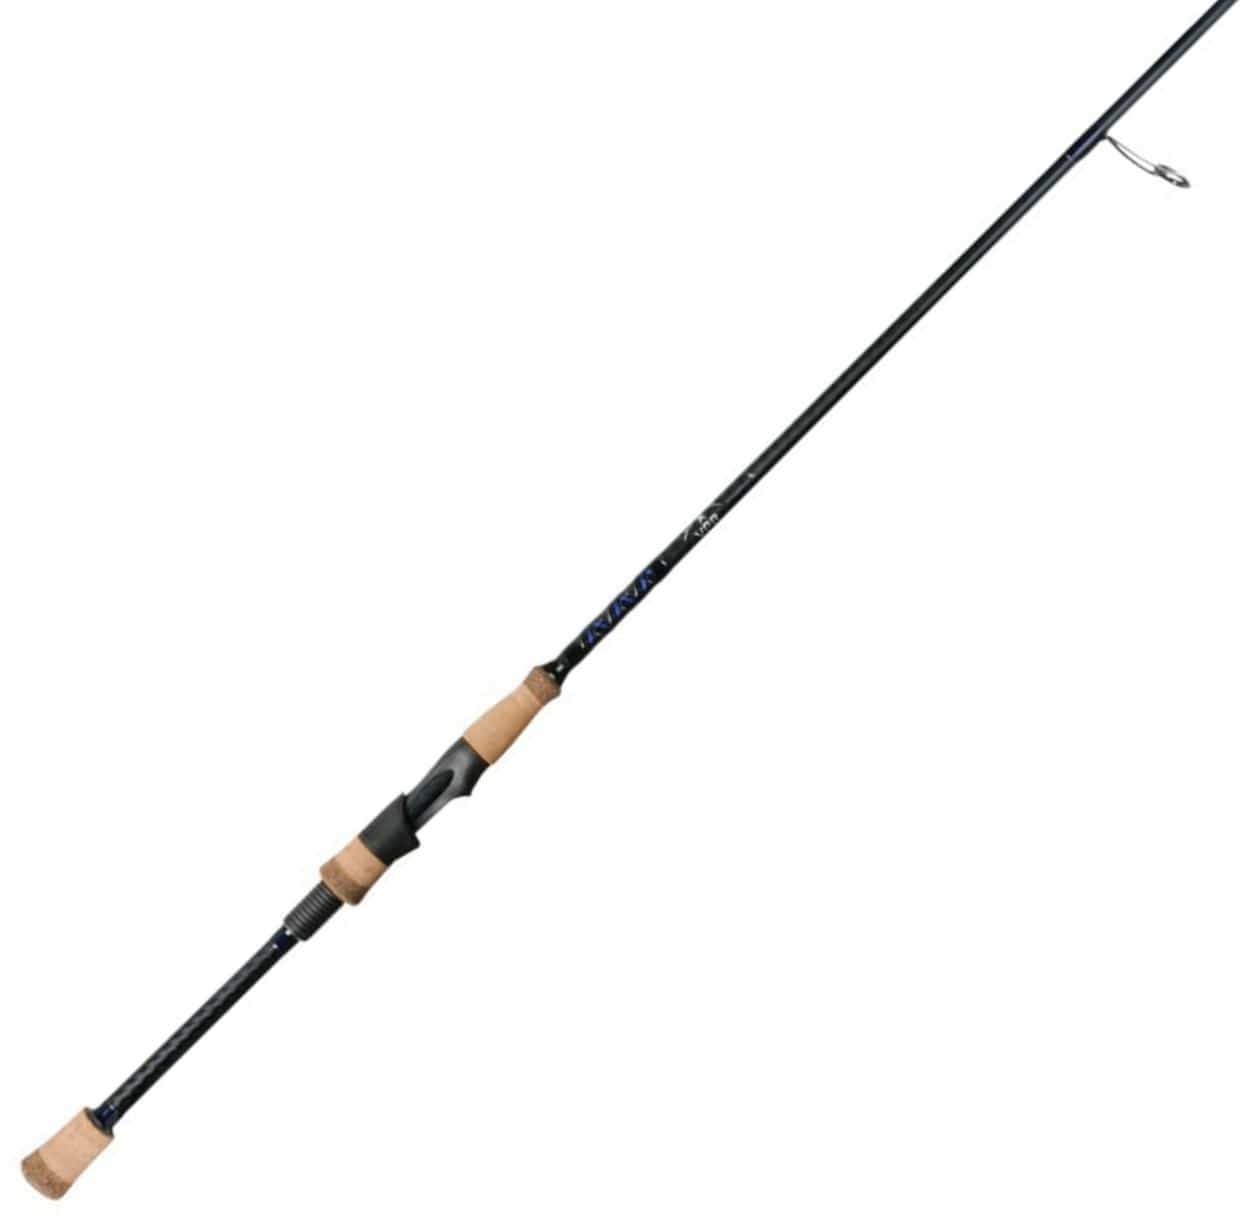 ZL Fishing Poles, Lightweight Casting & Spinning Rod Fishing Pole